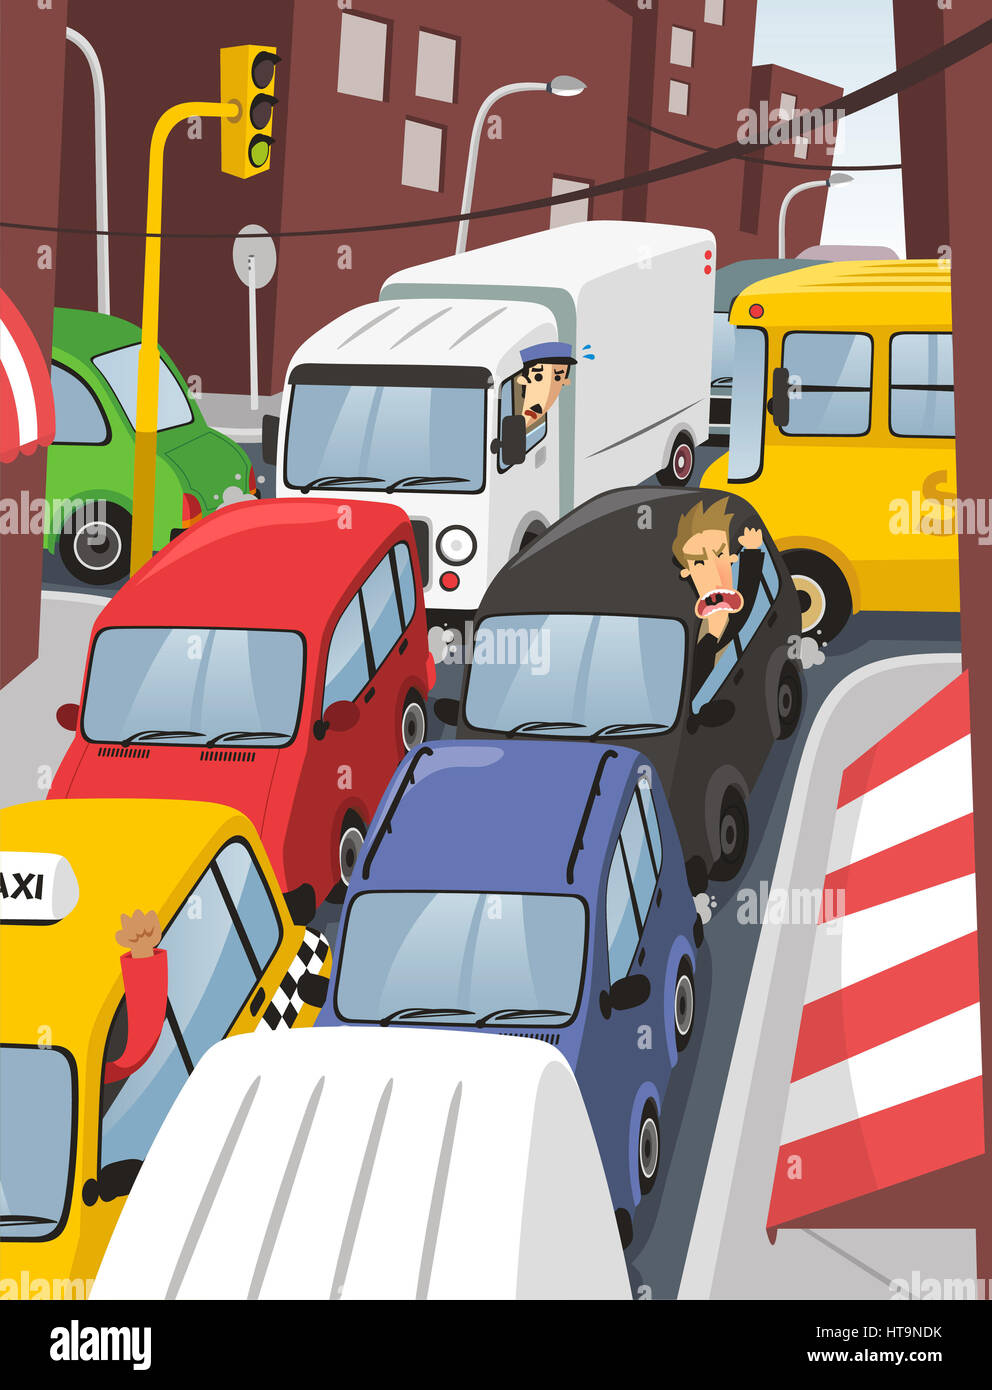 traffic jam in the city illustration Stock Photo